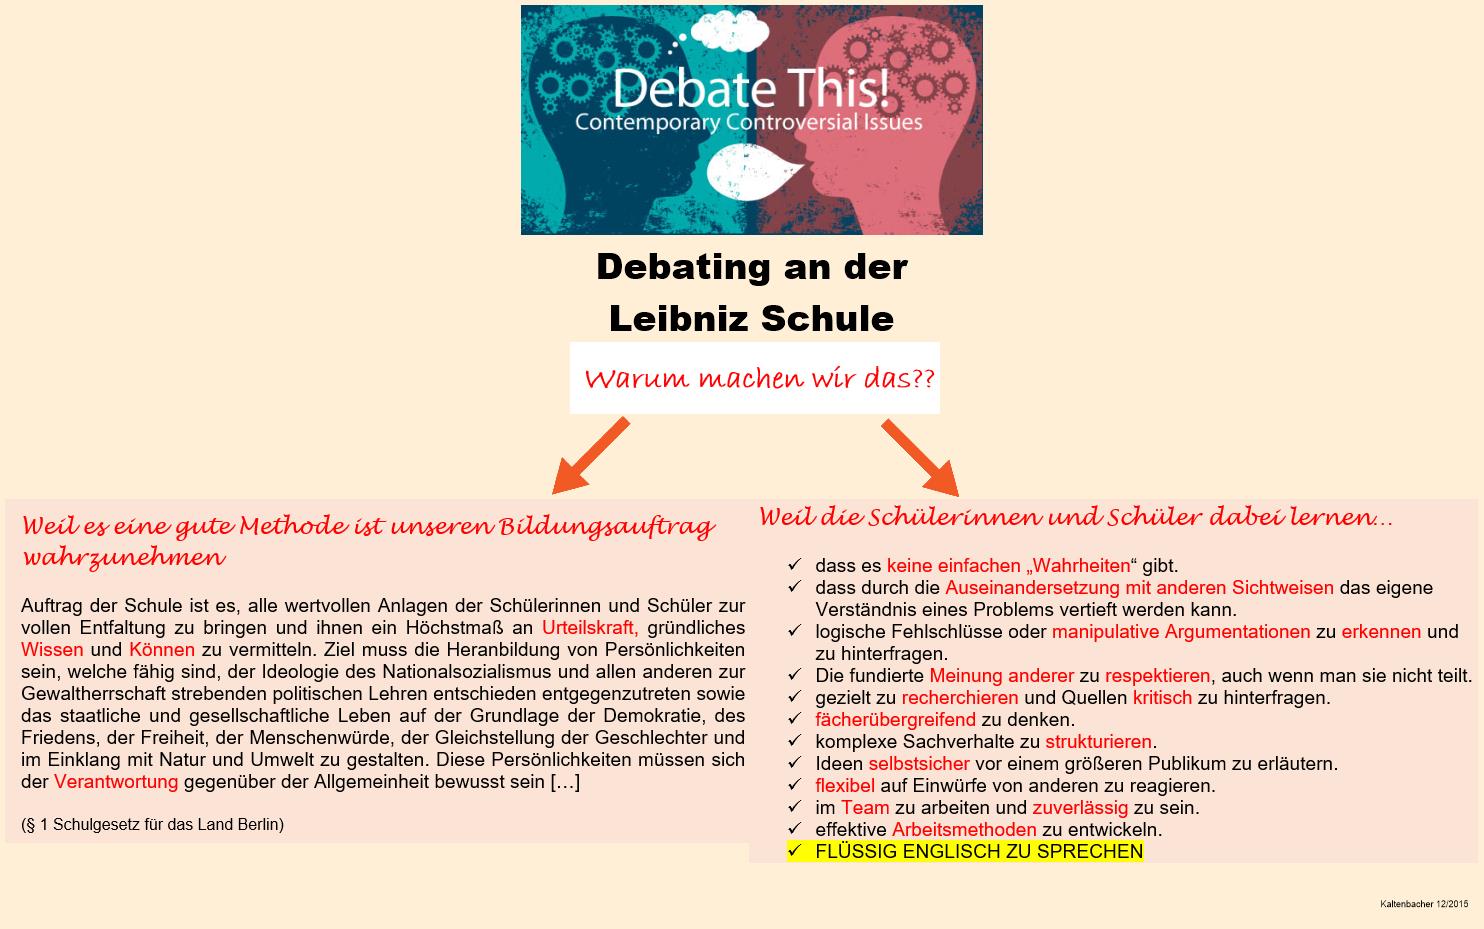 Debating an der Leibniz Schule